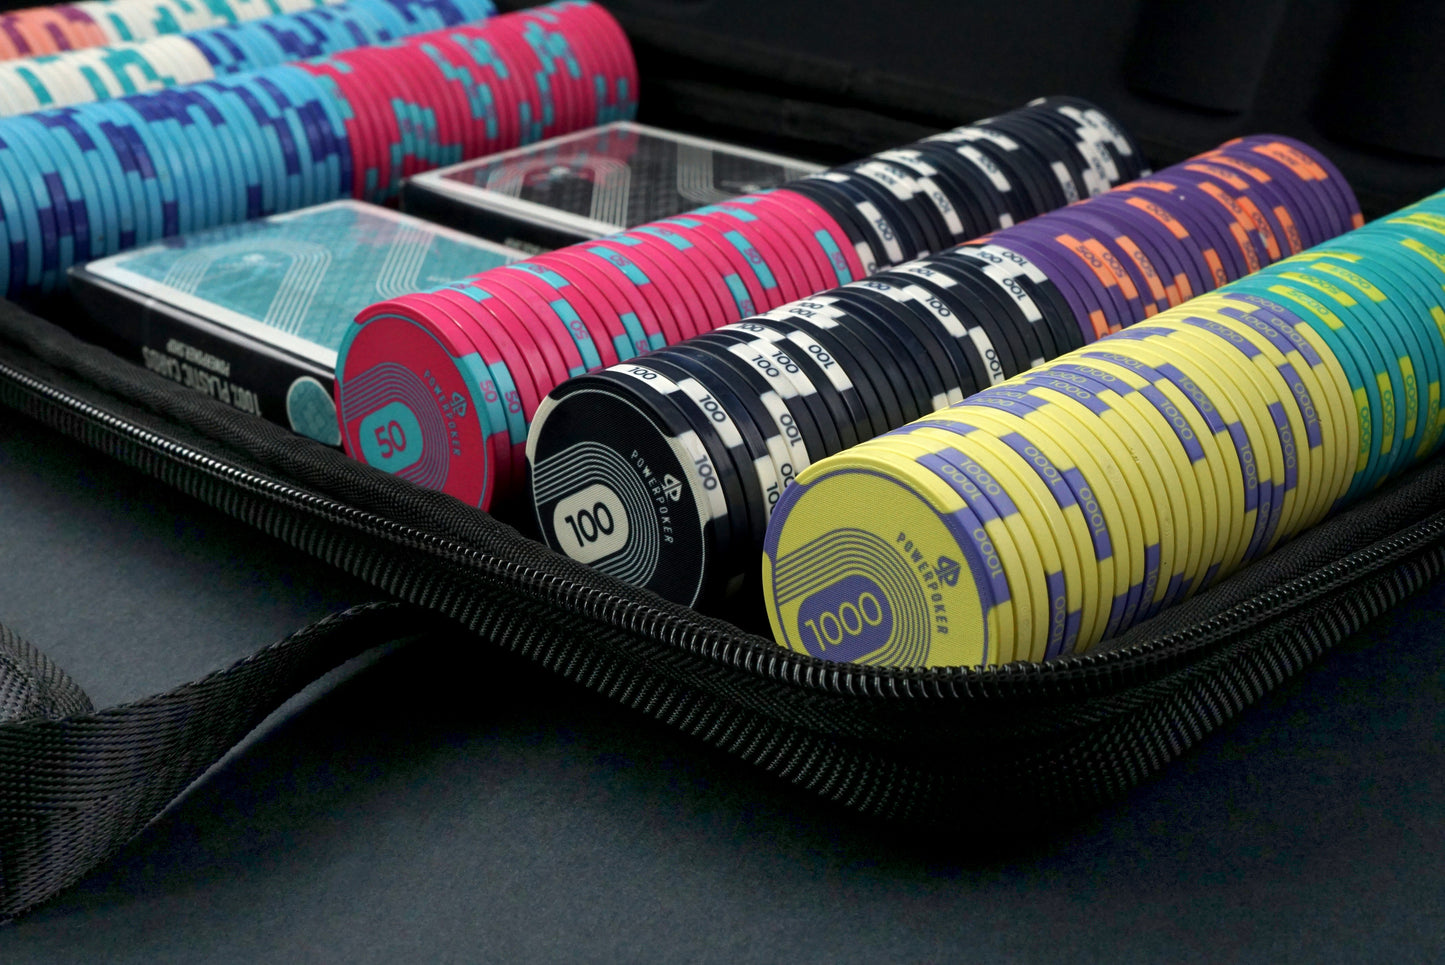 Pokerkoffer Komplett Set - "Sports" Turnier 300